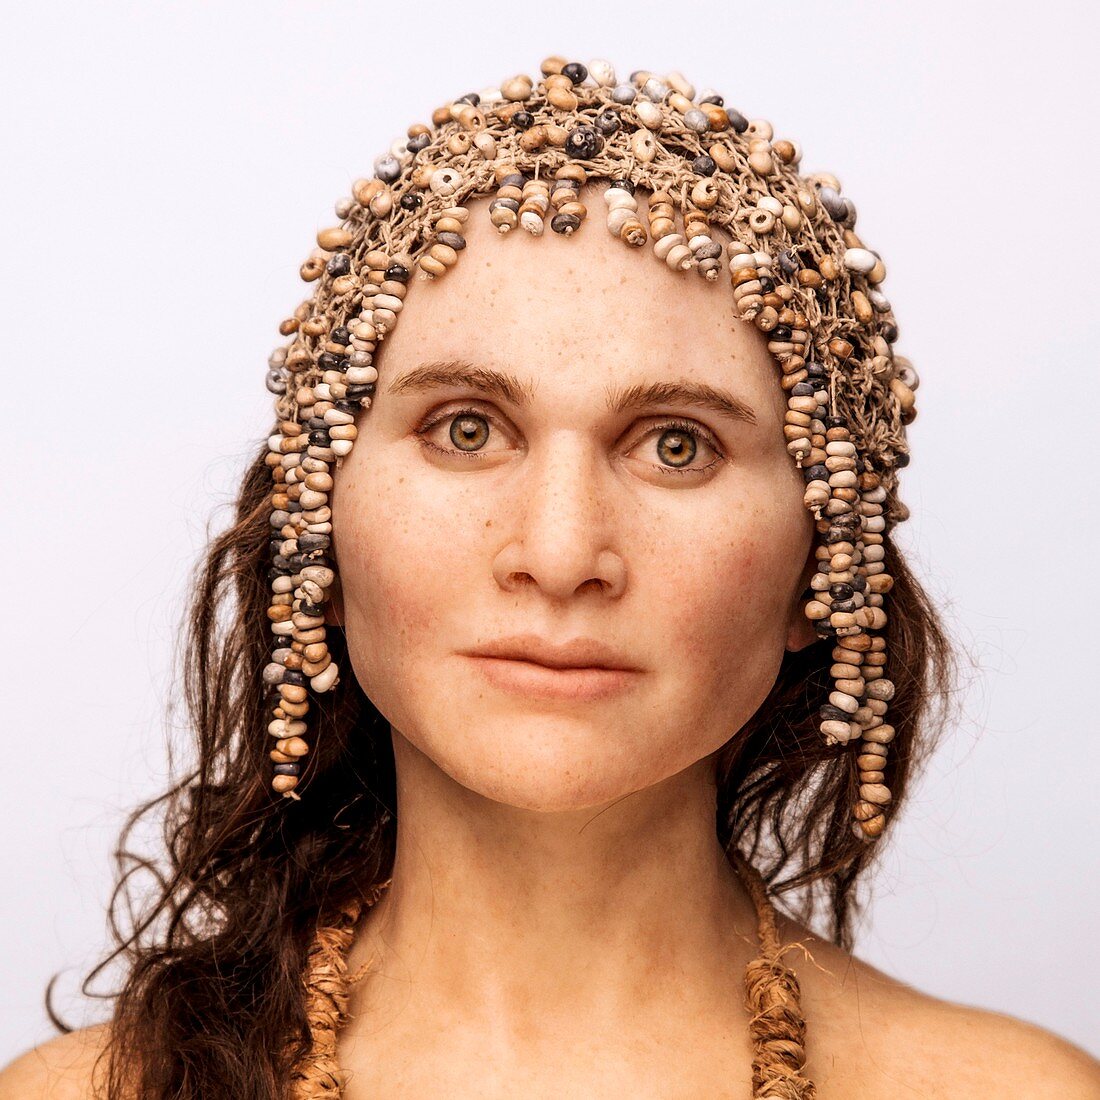 Early human with headdress